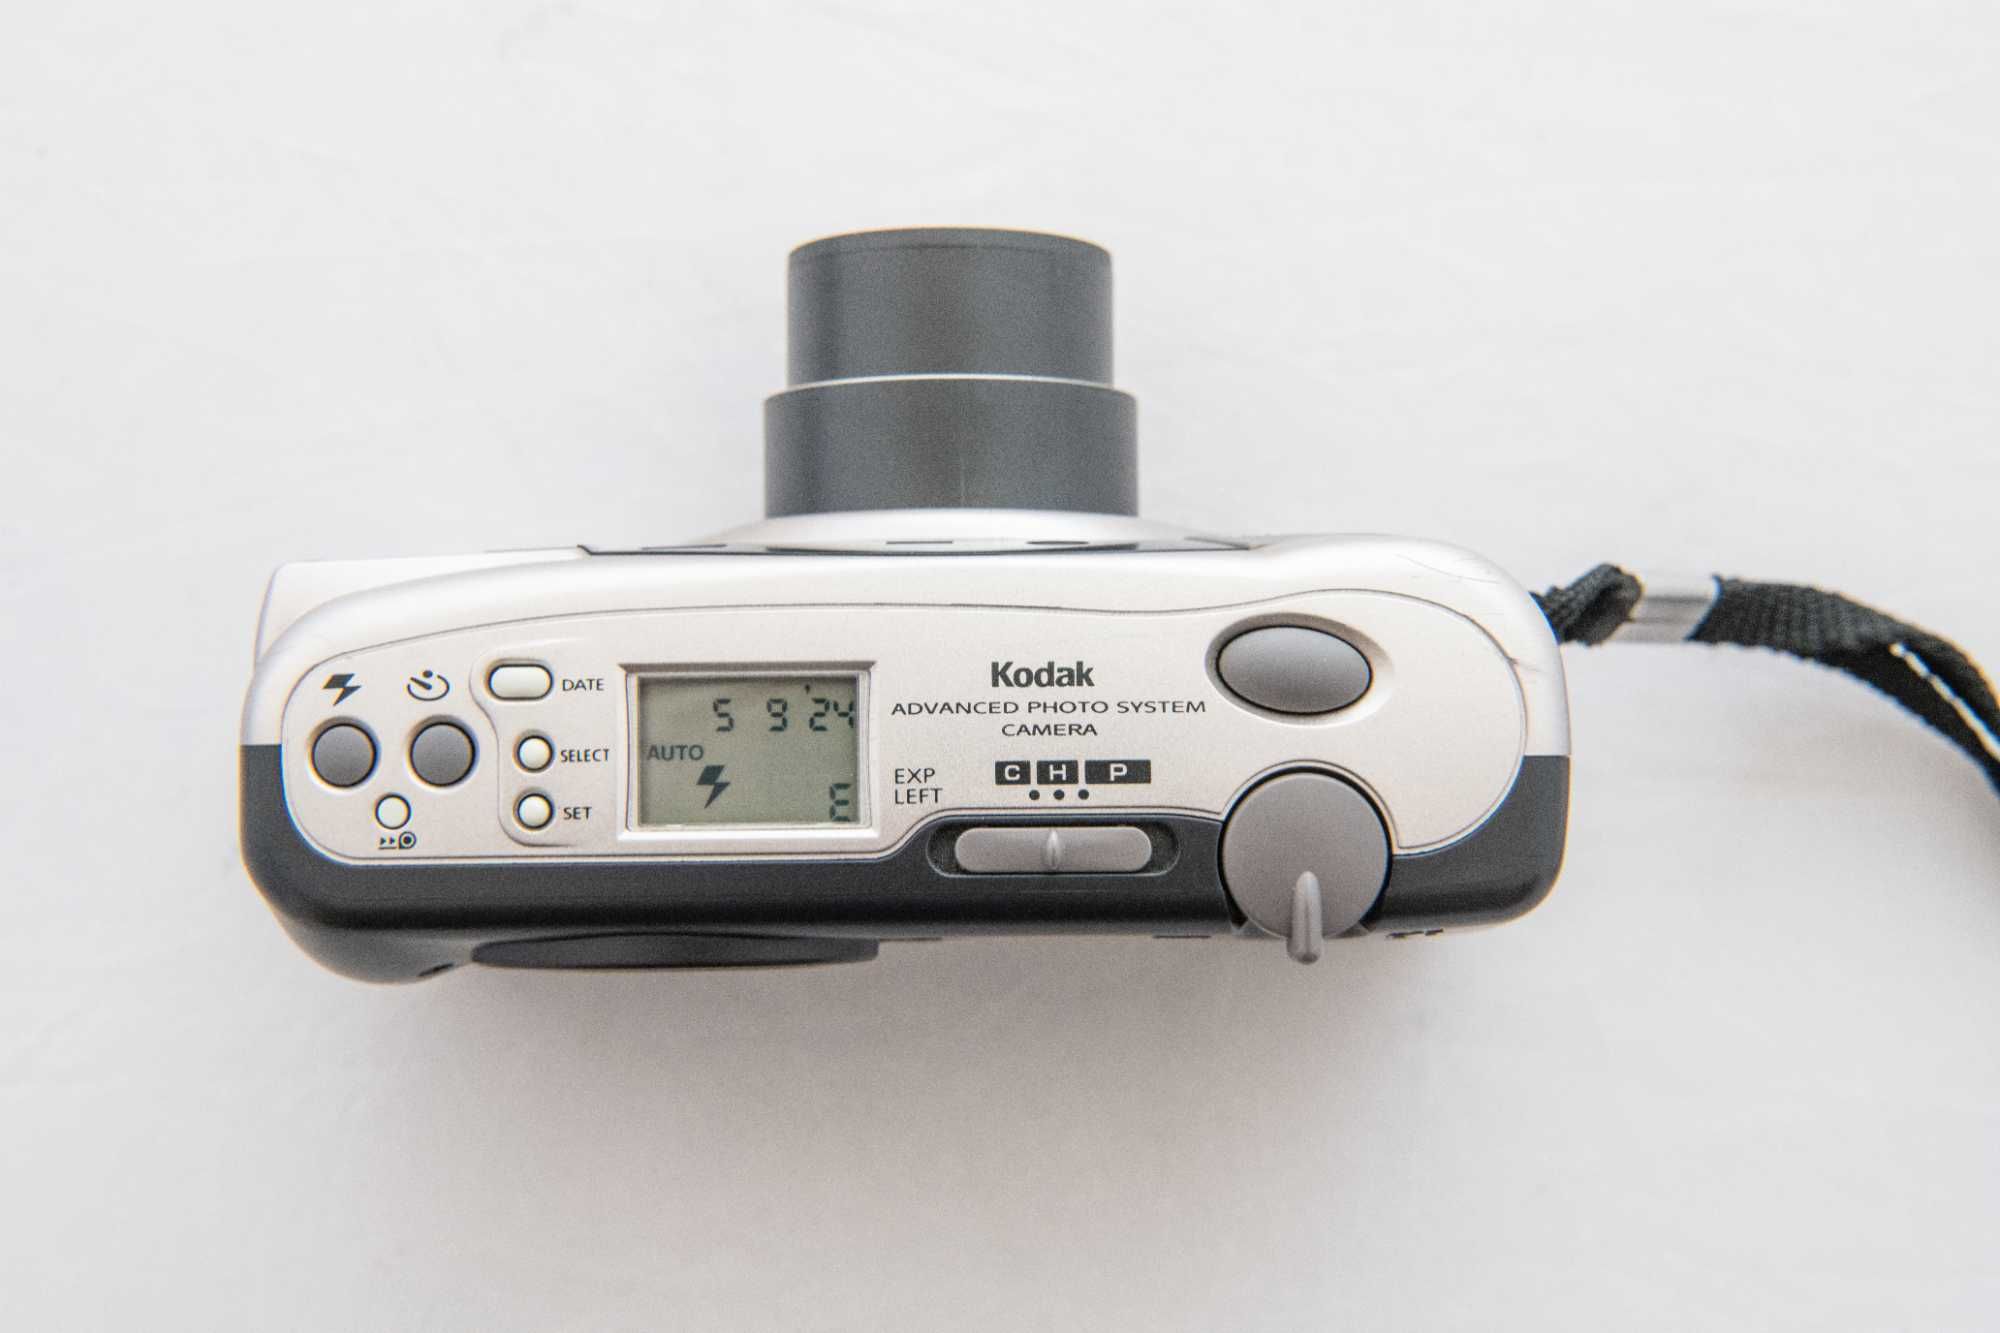 Aparat analogowy na kliszę APS Kodak ADVANTIX F600